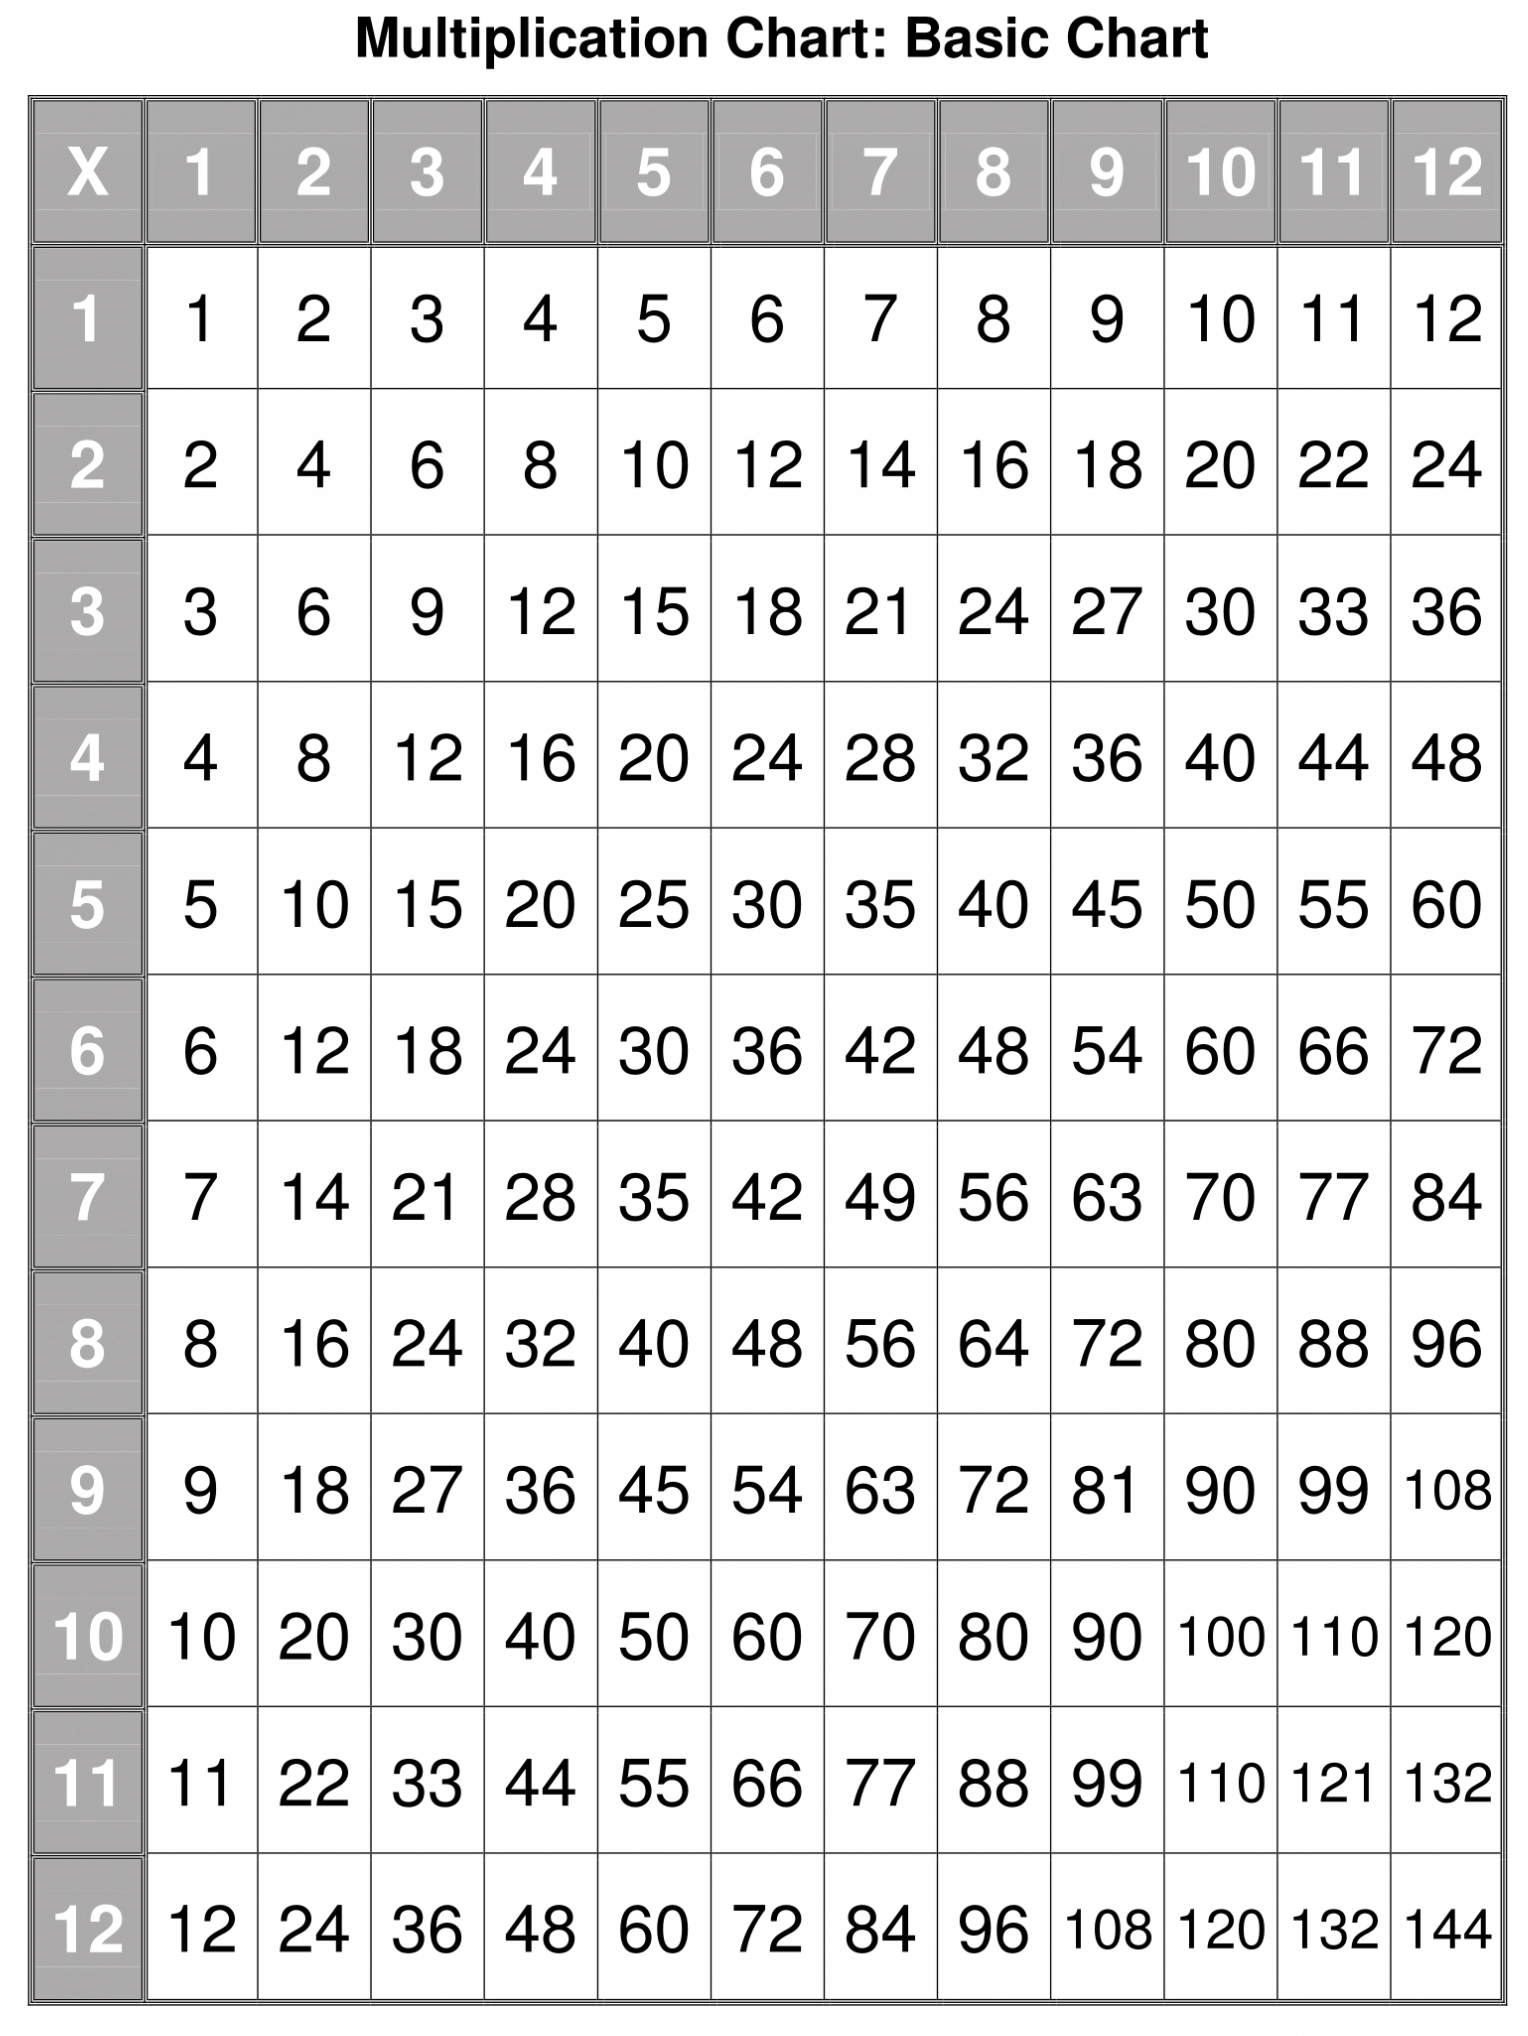 Printable Multiplication Table Pdf | Multiplication Charts pertaining to Printable Multiplication Chart